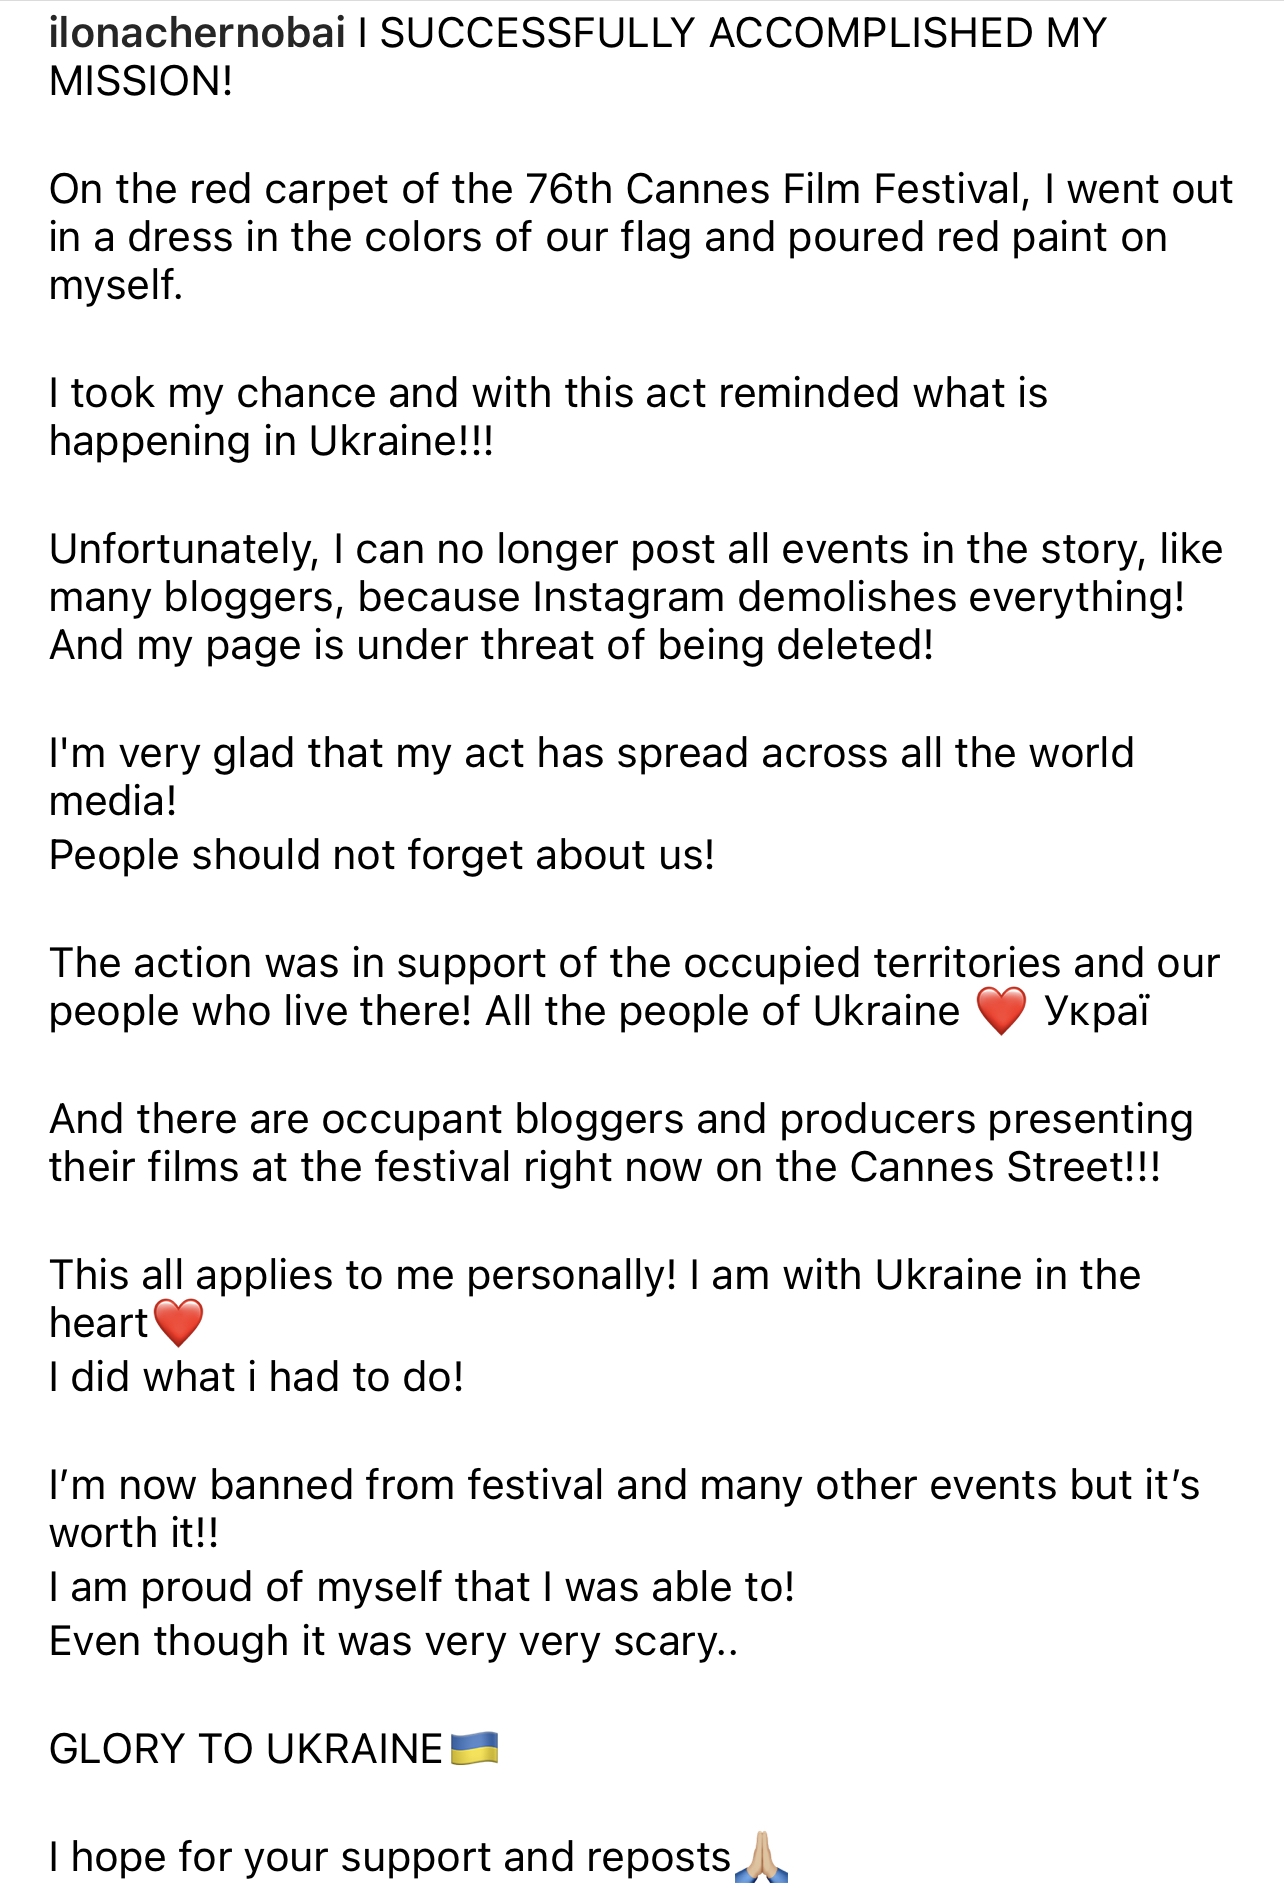 Ilona Chernobai's statement 